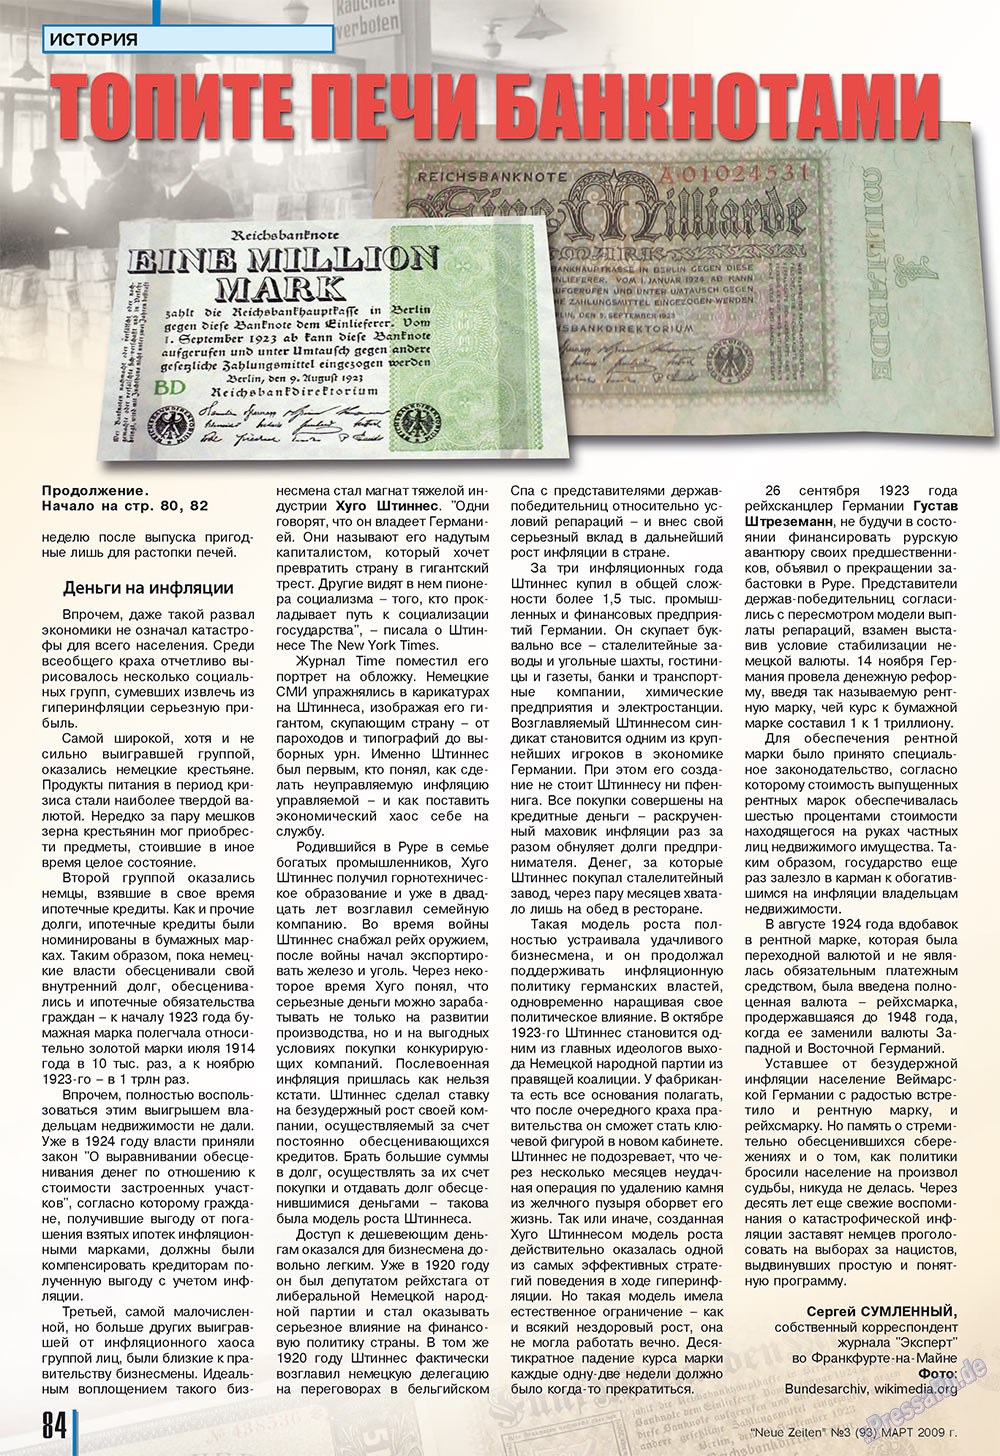 Neue Zeiten (журнал). 2009 год, номер 3, стр. 84